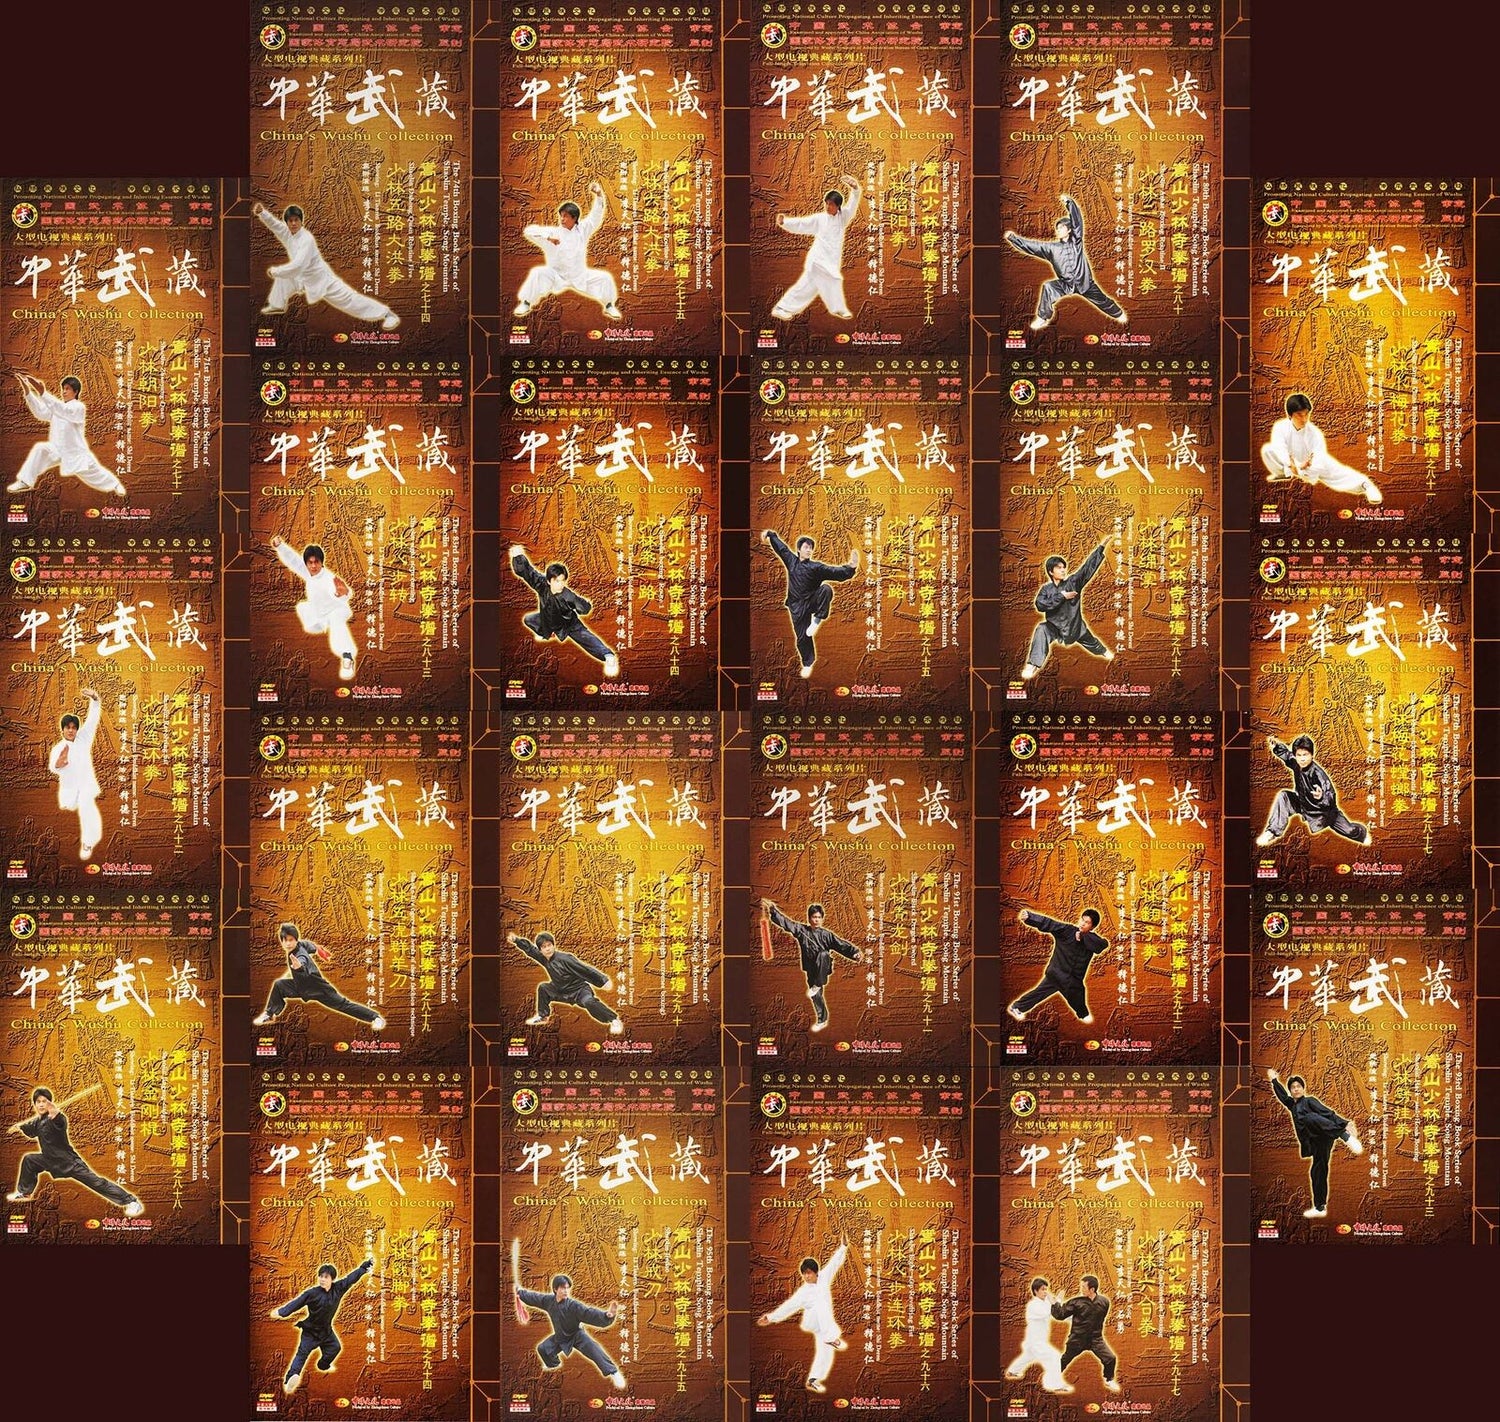 Songshan Shaolin Martial Arts Kung Fu 33 DVD Set by Shi Deren